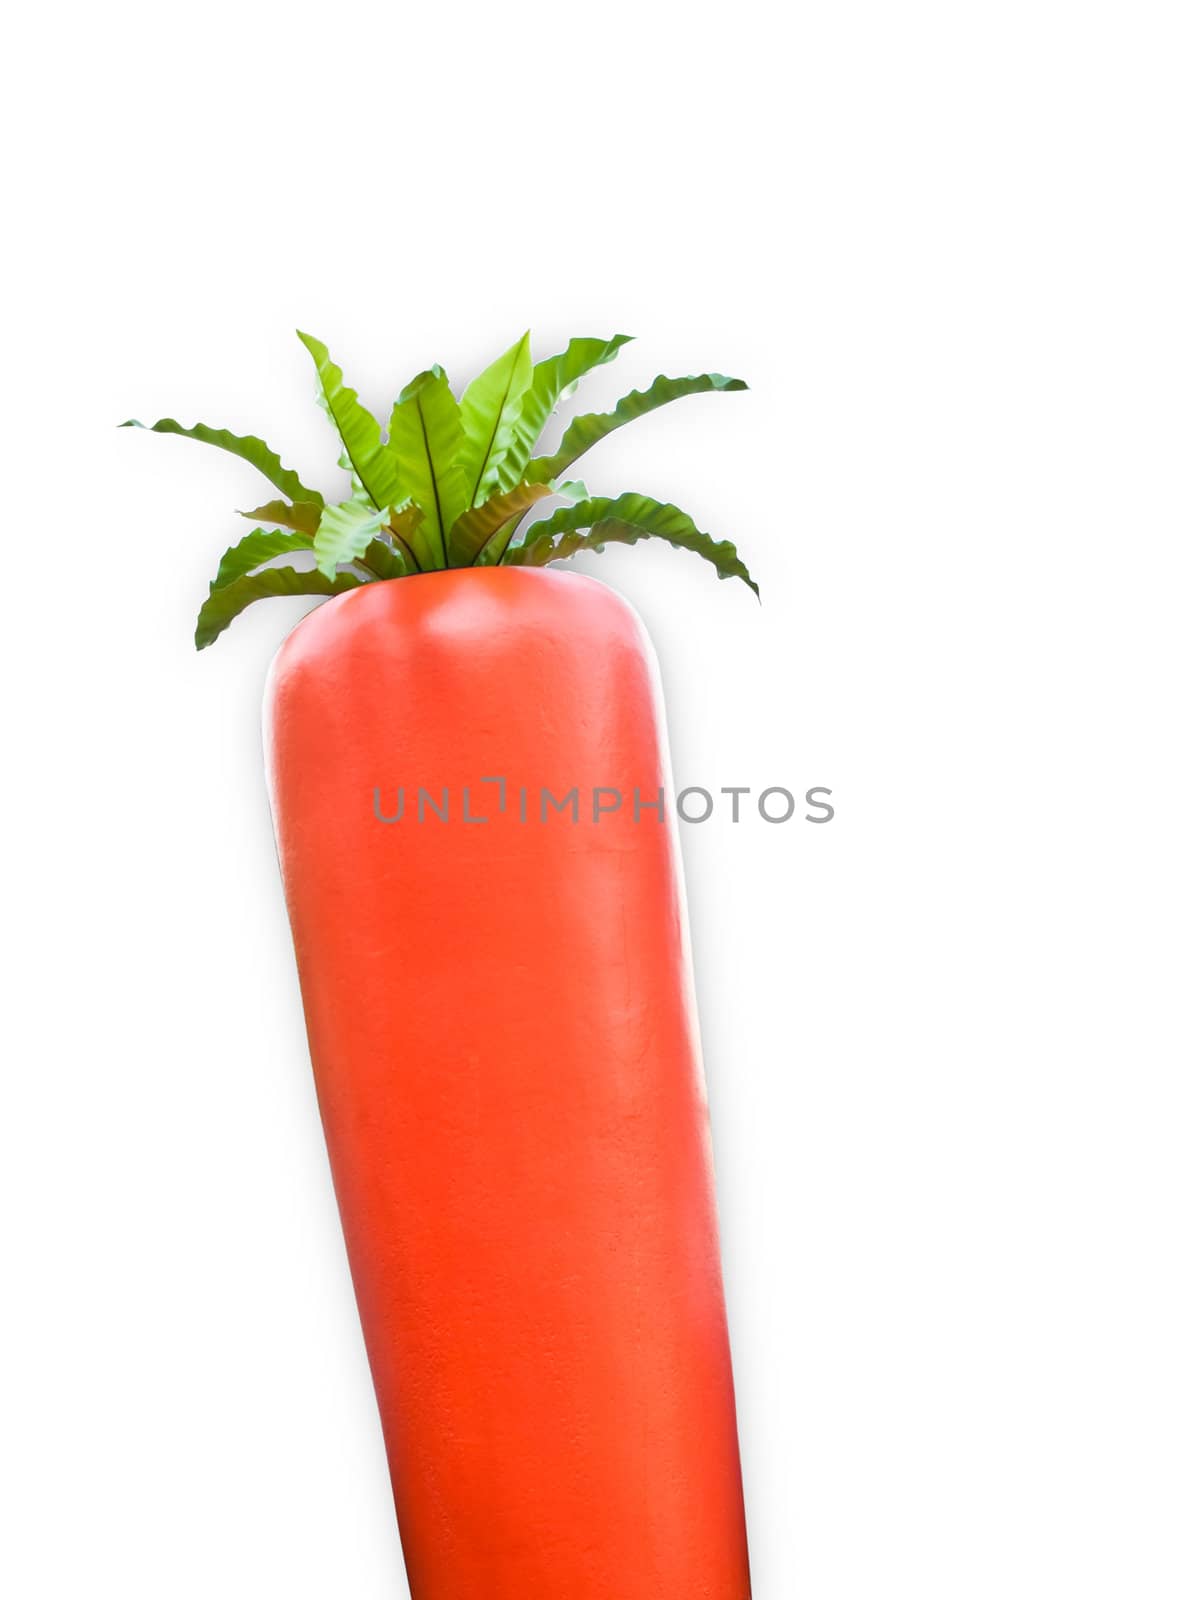 Big Carrot by FrameAngel